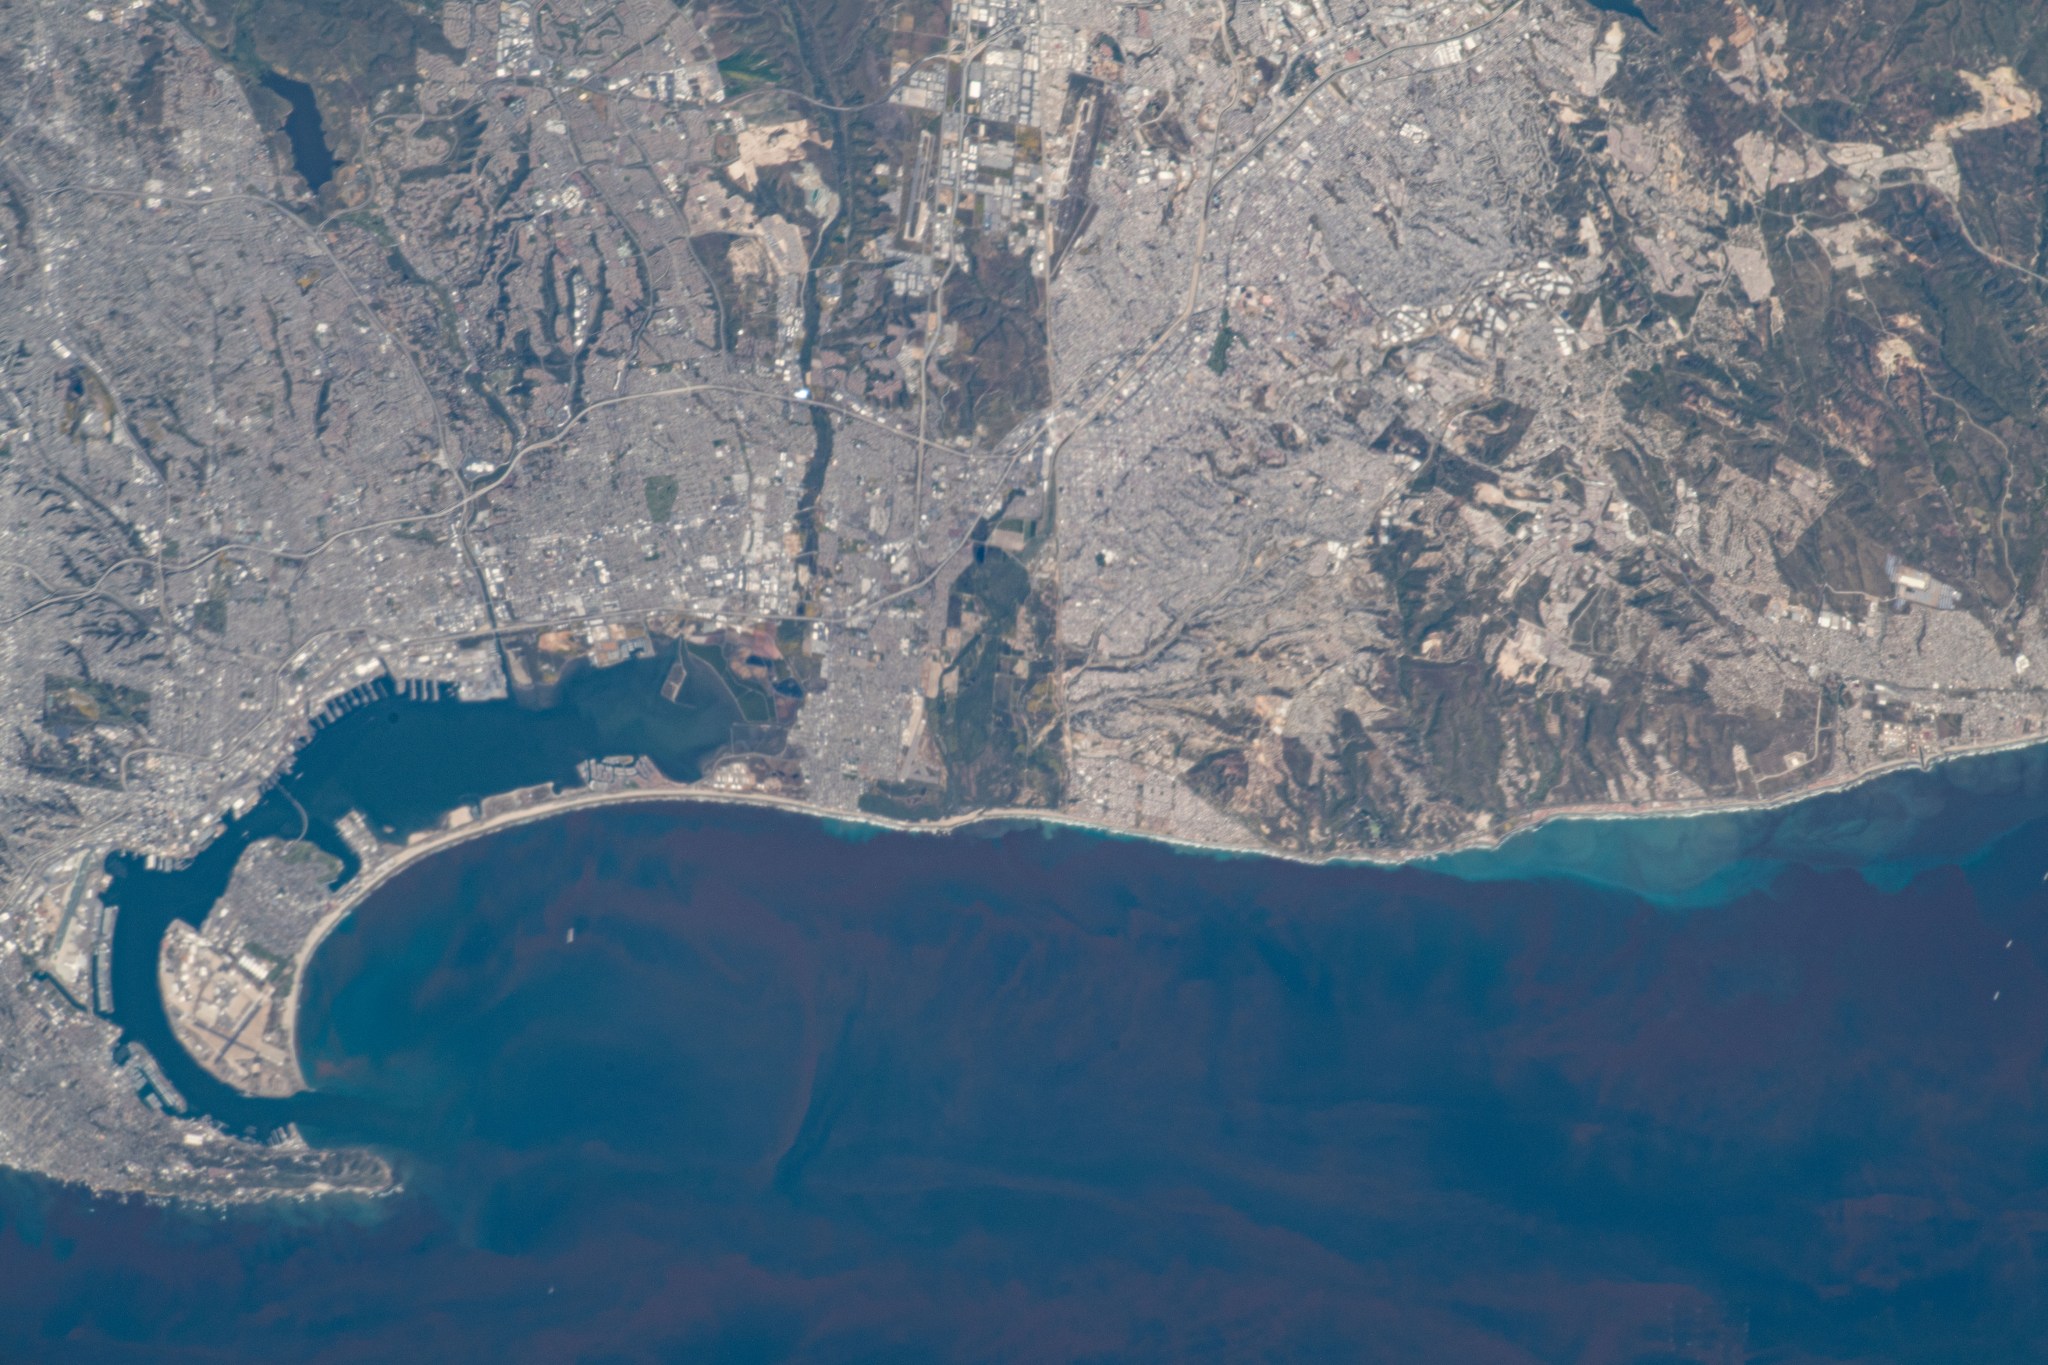 San Diego as seen from orbit